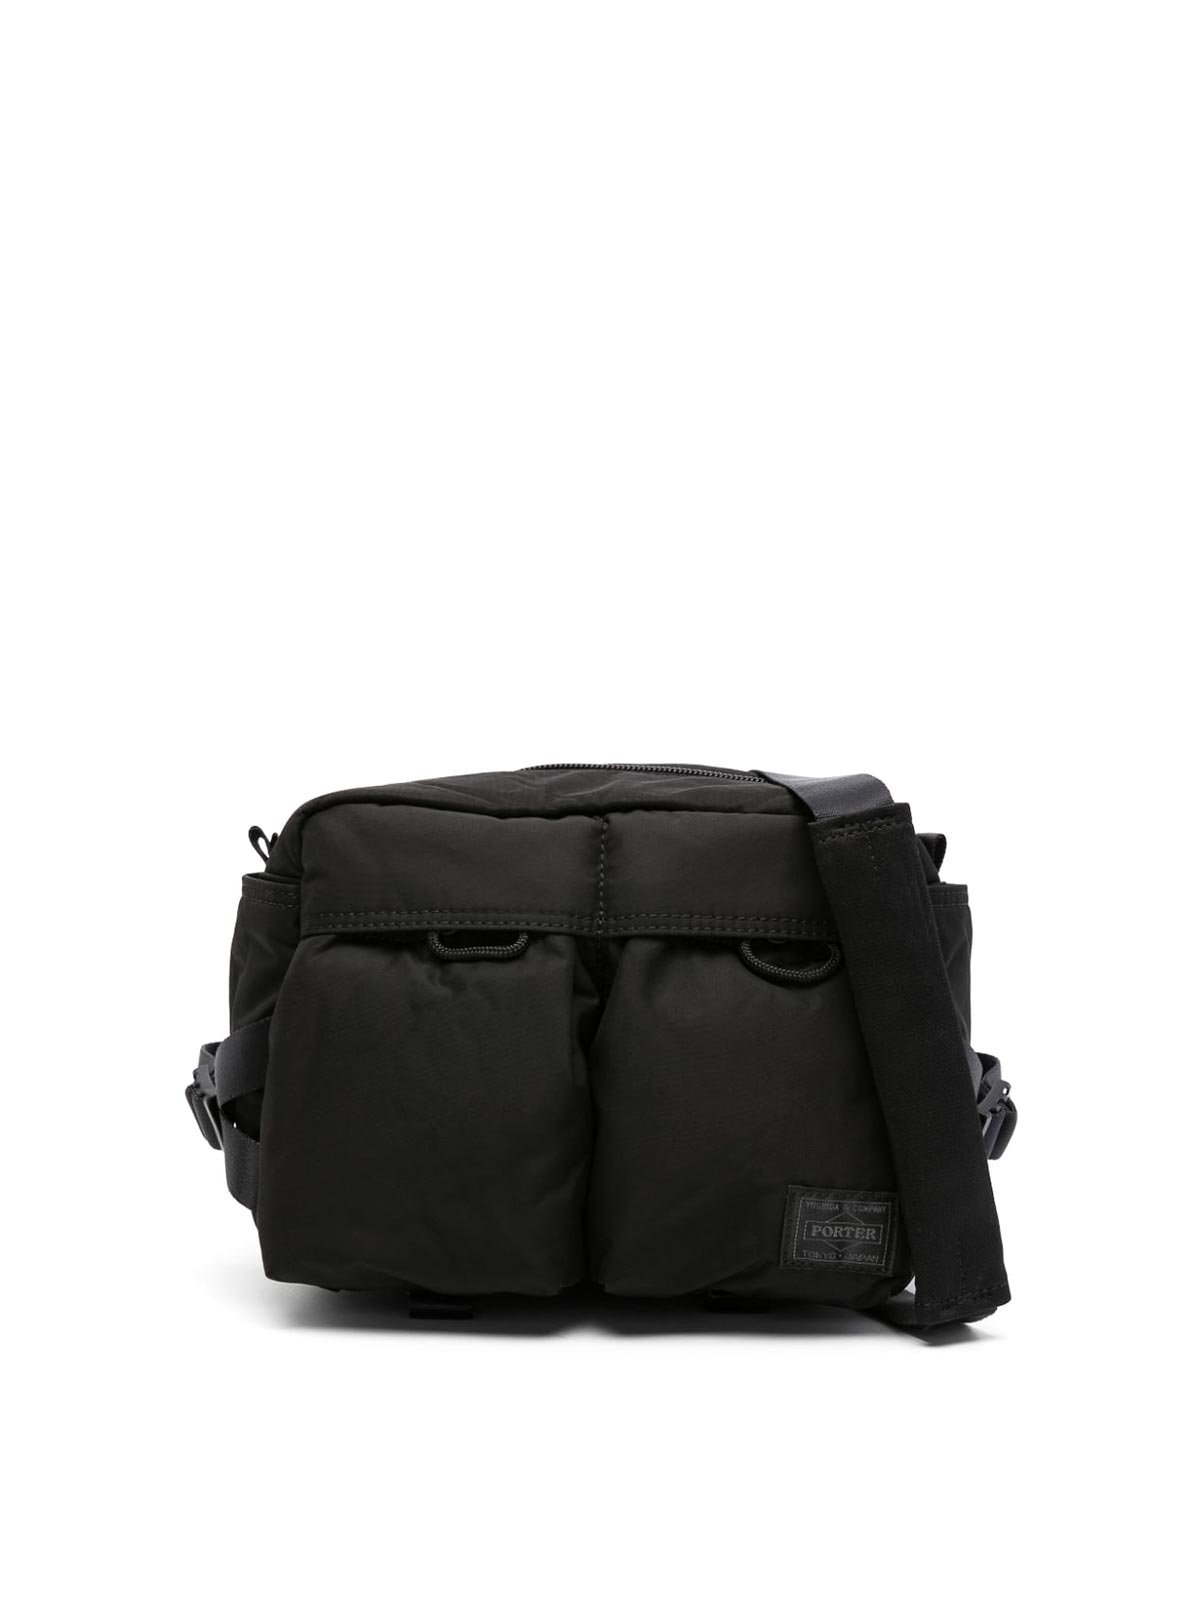 Porter-yoshida & Co Senses Shoulder Bag In Black